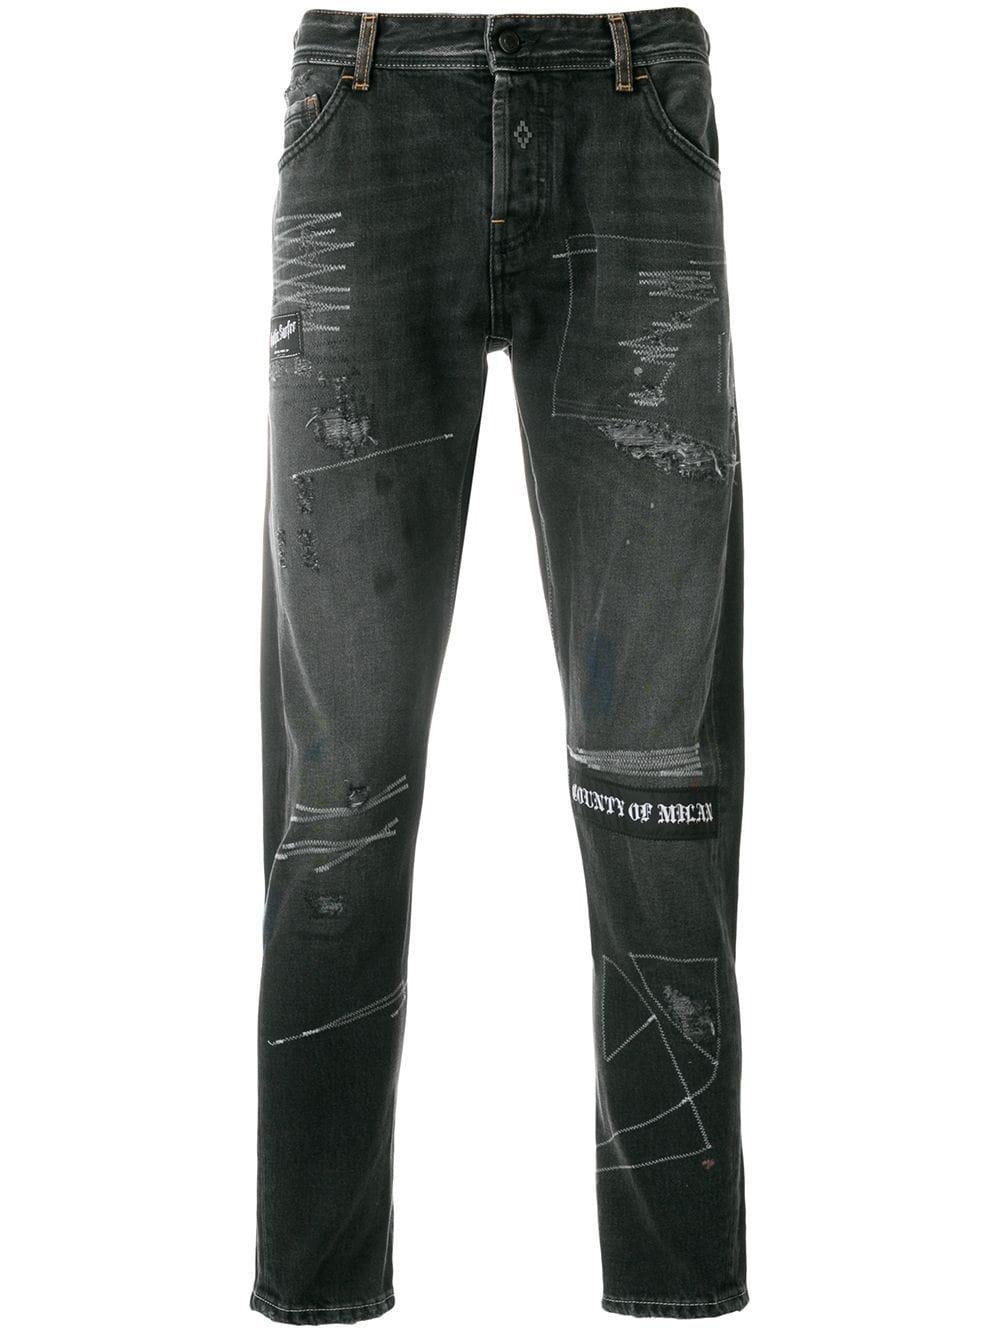 Marcelo Burlon Denim Gothic Surfer Jeans in Grey (Grey) for Men - Lyst